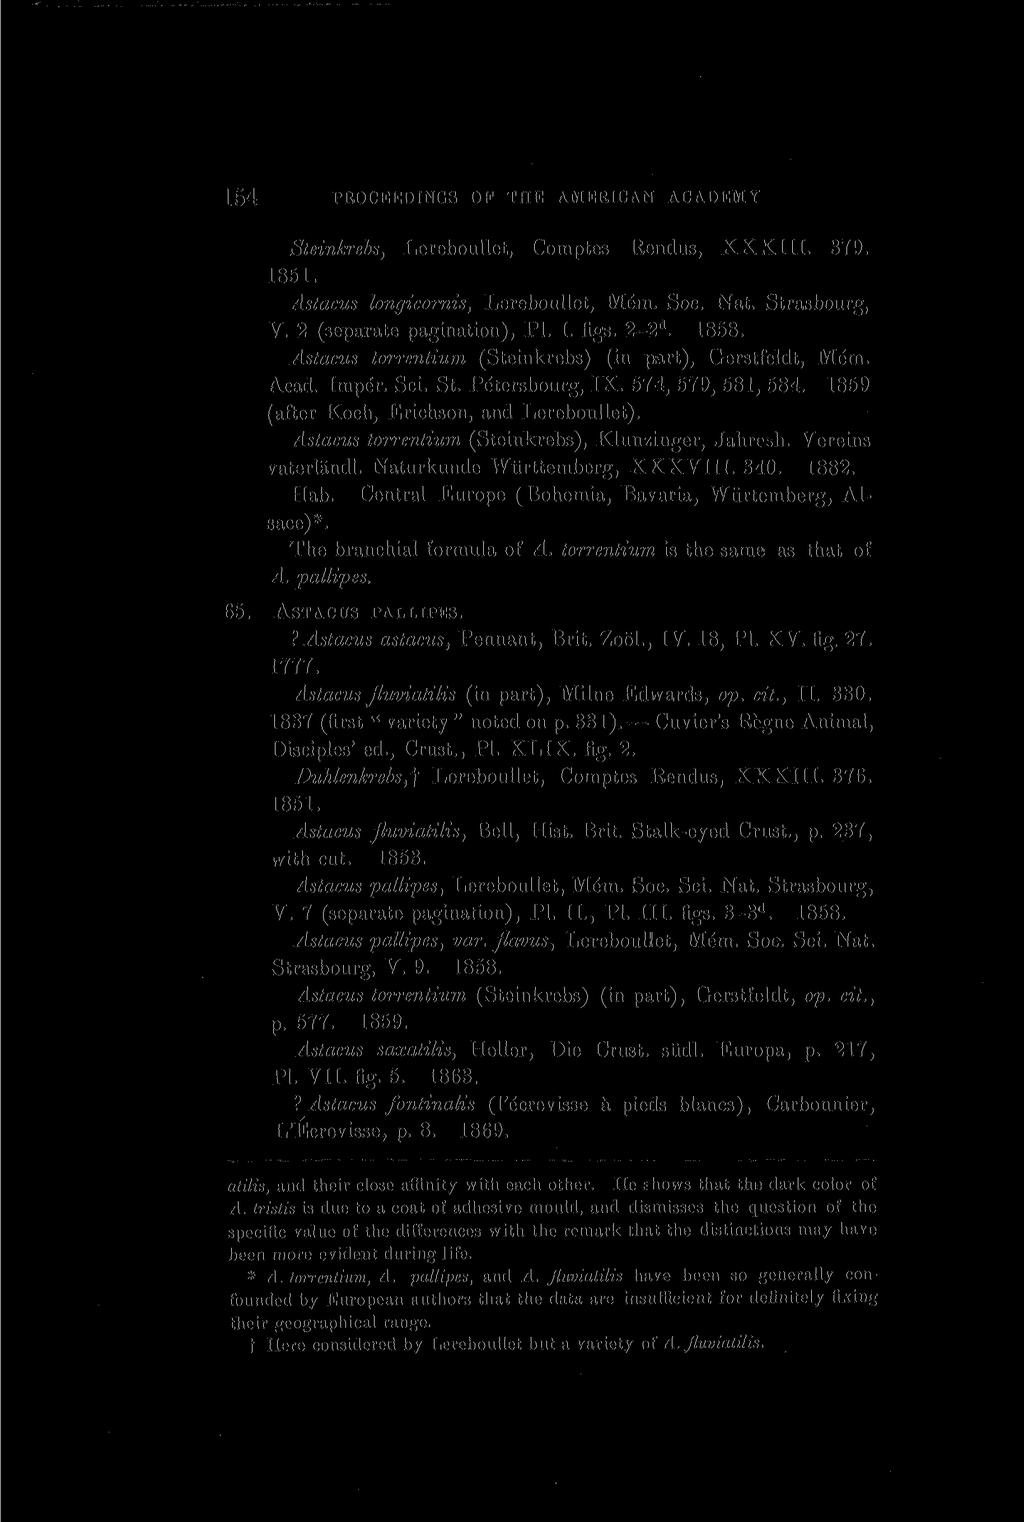 154 PROCEEDINGS OF TIIE AMERICAN ACADEMY Steinkrebs, Lereboullet, Comptes Rendus, XXXIII. 379. 1851. Astacus longicornis, Lereboullet, Mem. Soc. Nat. Strasbourg, V. 2 (separate pagination), Pl. I.